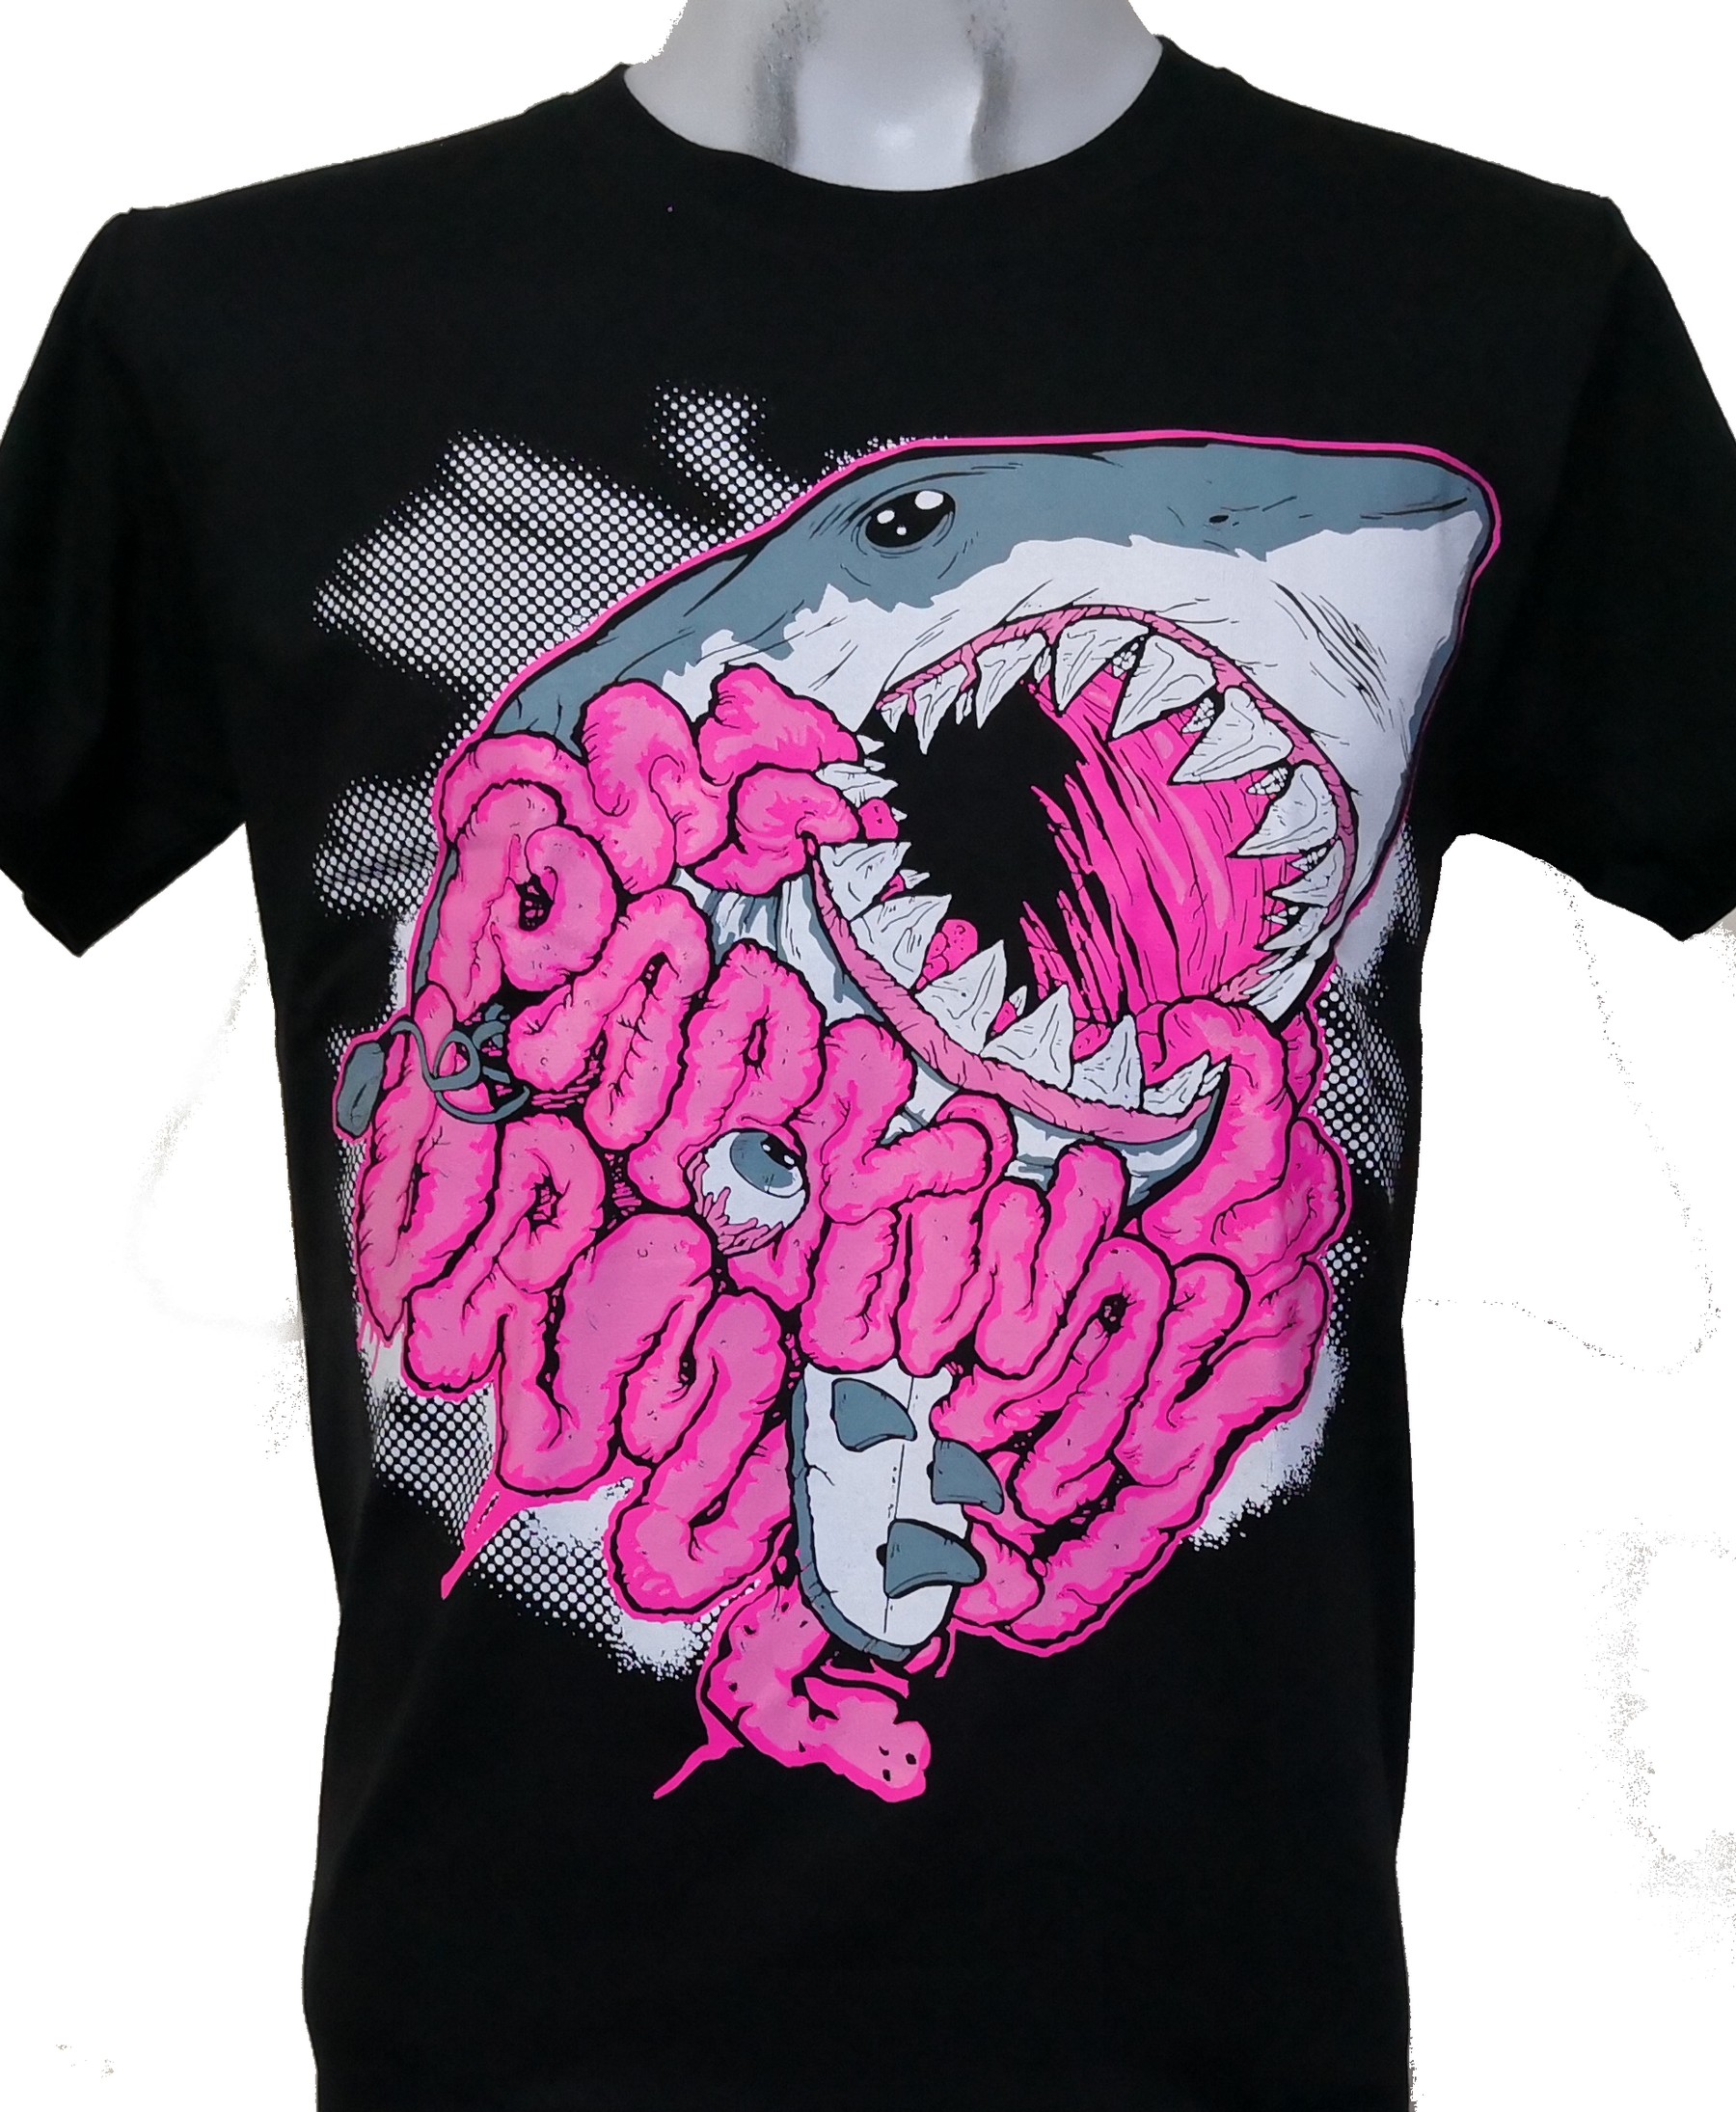 Authentic PARKWAY DRIVE Band Sharktopus Skulls Logo T-Shirt S M L XL 2XL NEW 